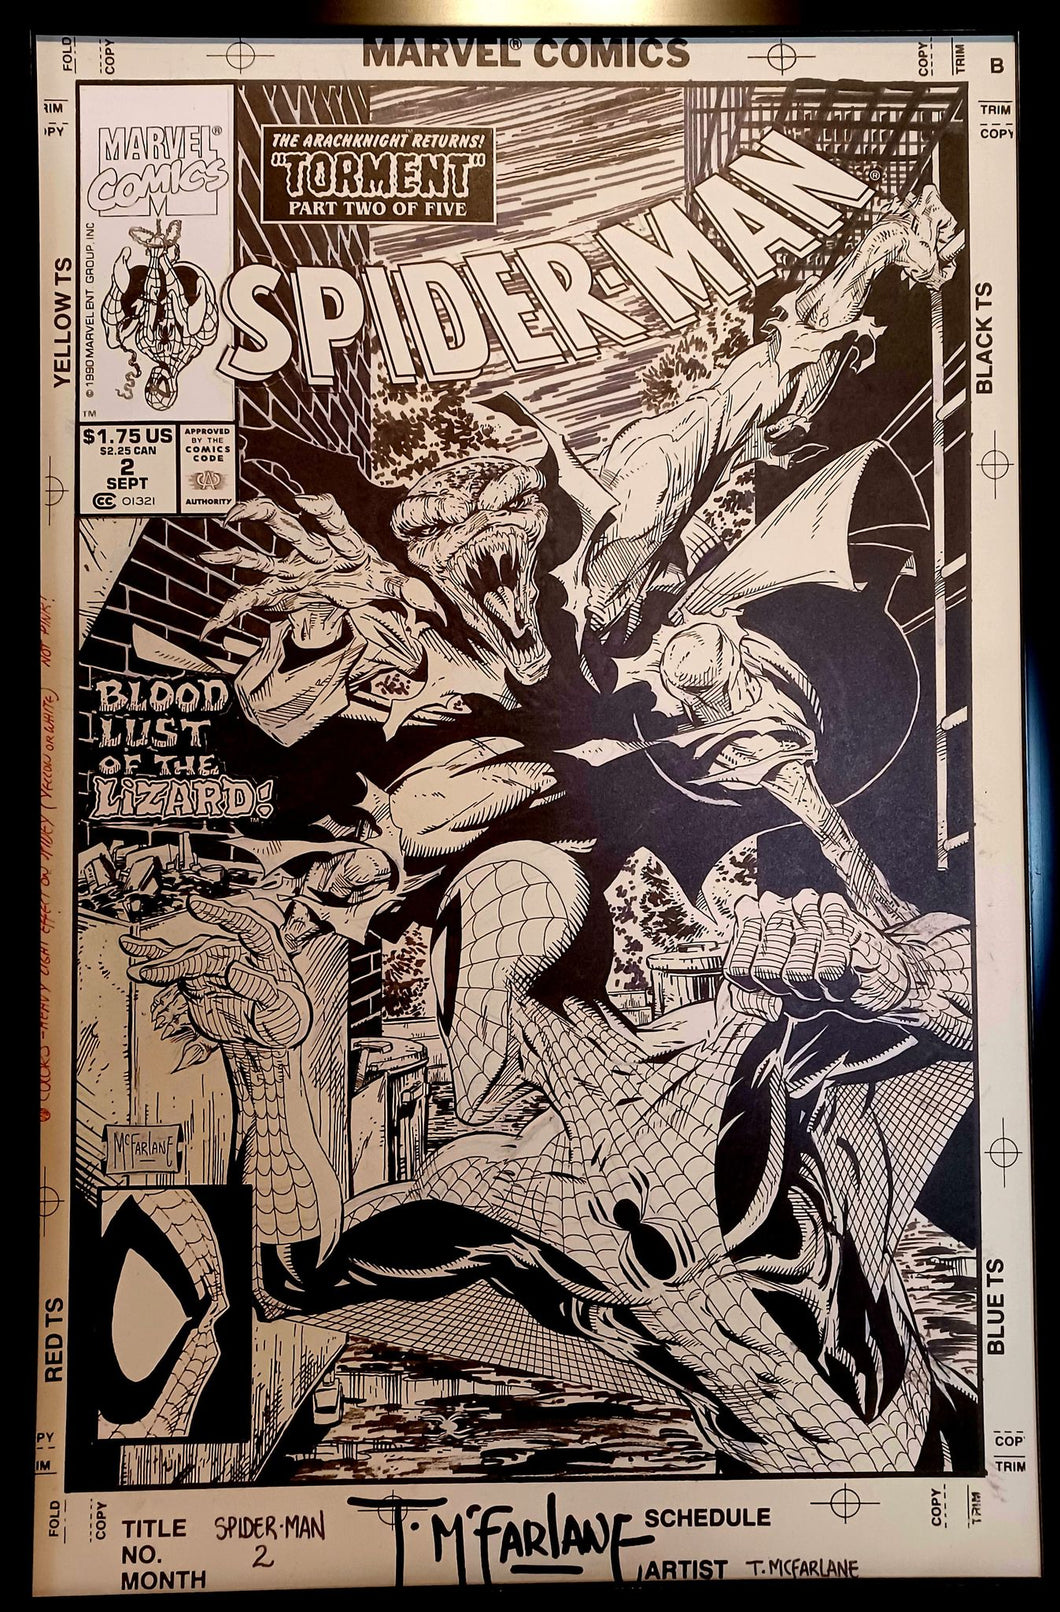 Spider-Man #2 by Todd McFarlane 11x17 FRAMED Original Art Print Comic Poster